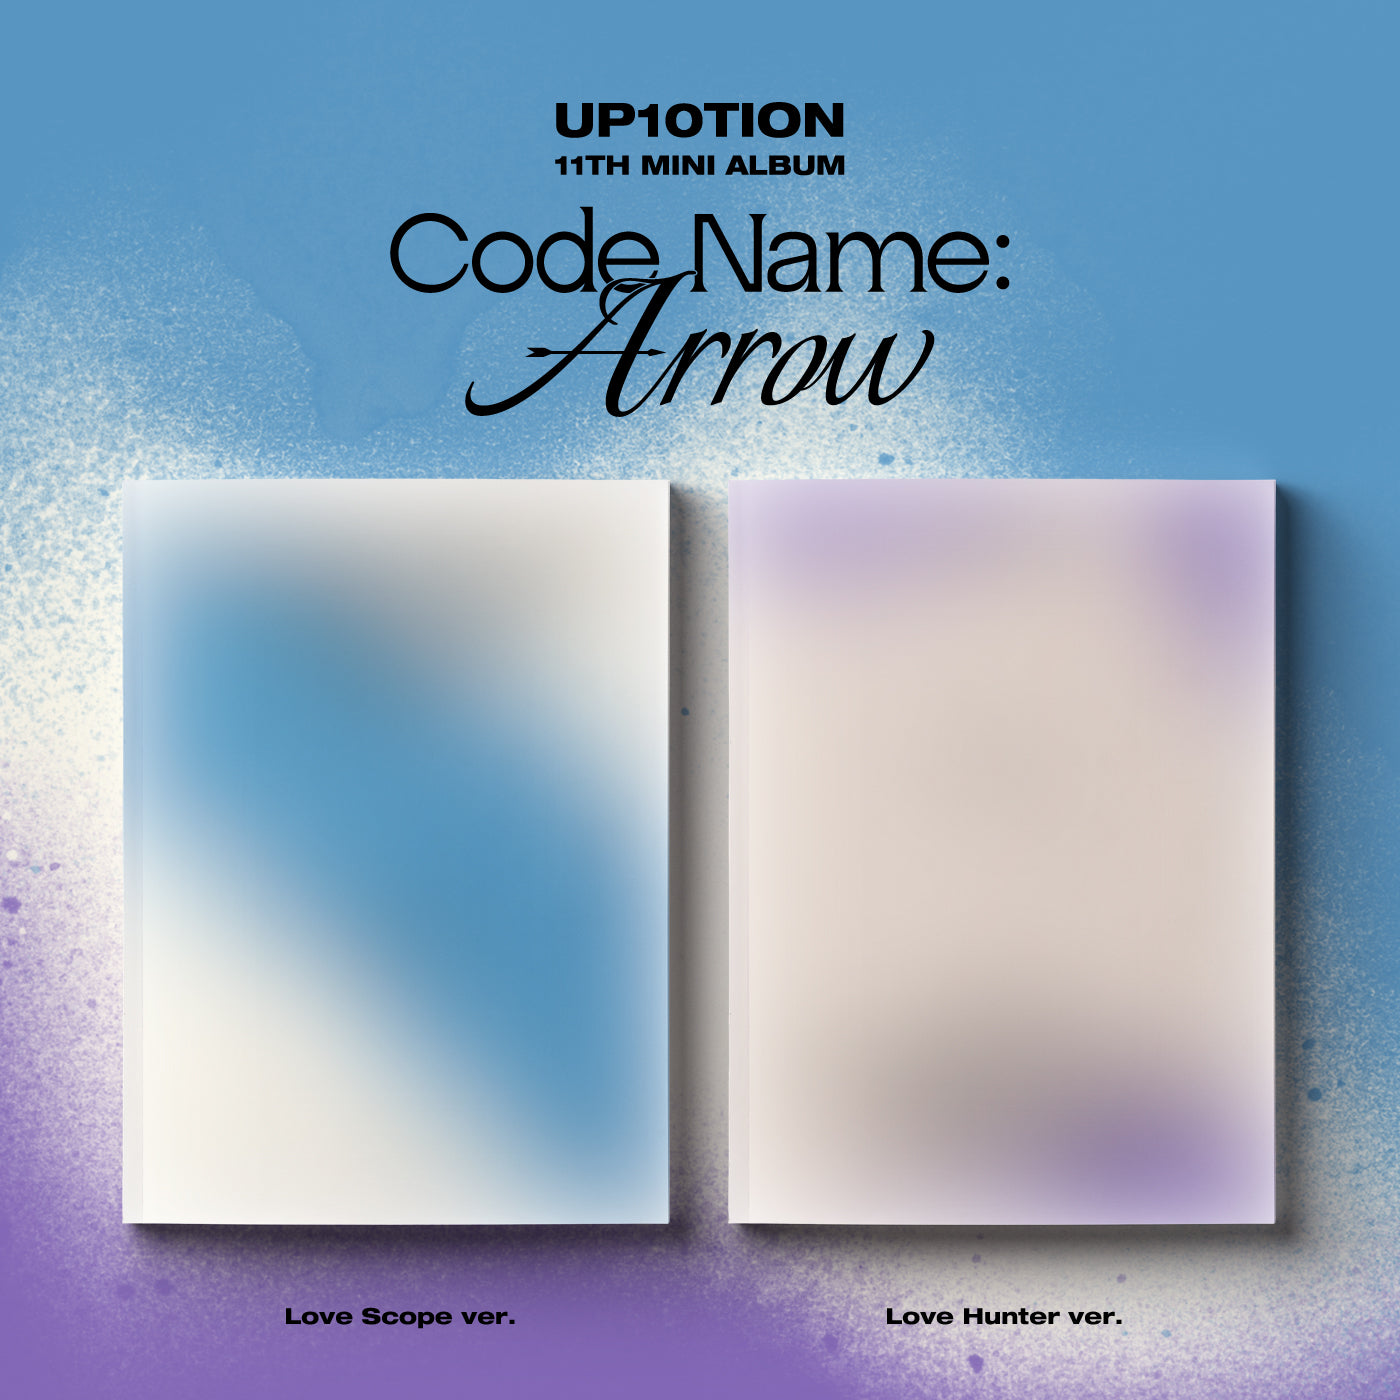 UP10TION 11TH MINI ALBUM 'CODE NAME: ARROW' SET COVER